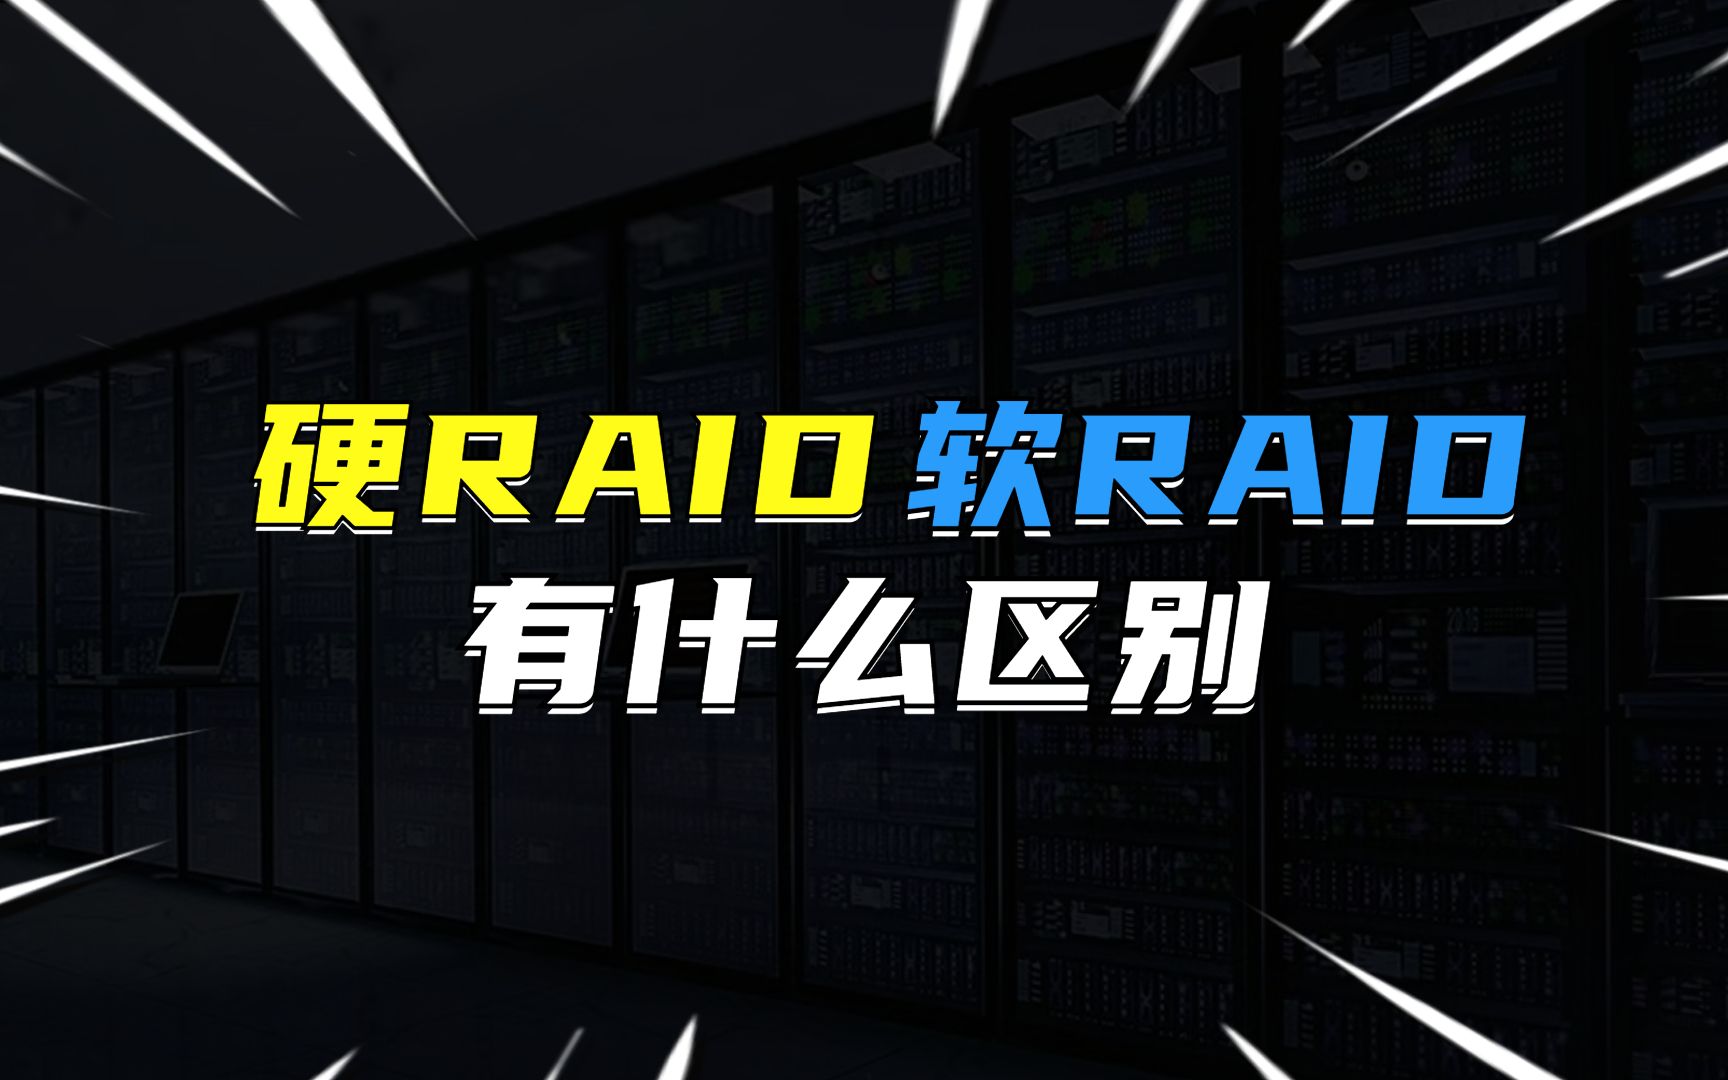 硬RAID和软RAID有什么区别？